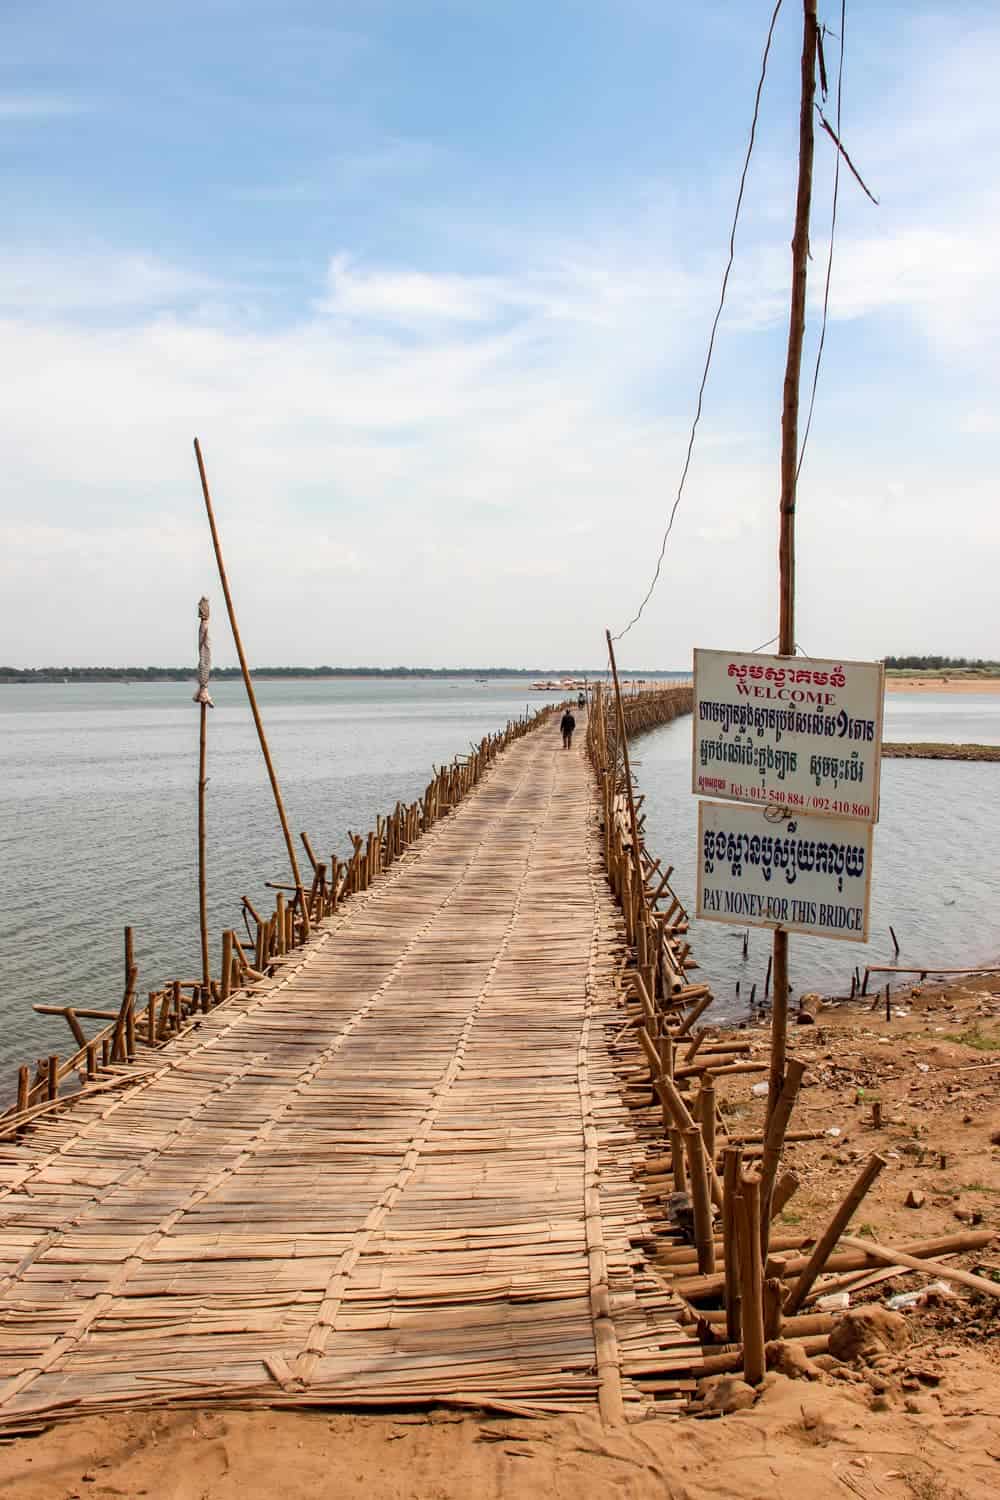 Price of bamboo bridge crossing in Kampong Cham, Cambodia